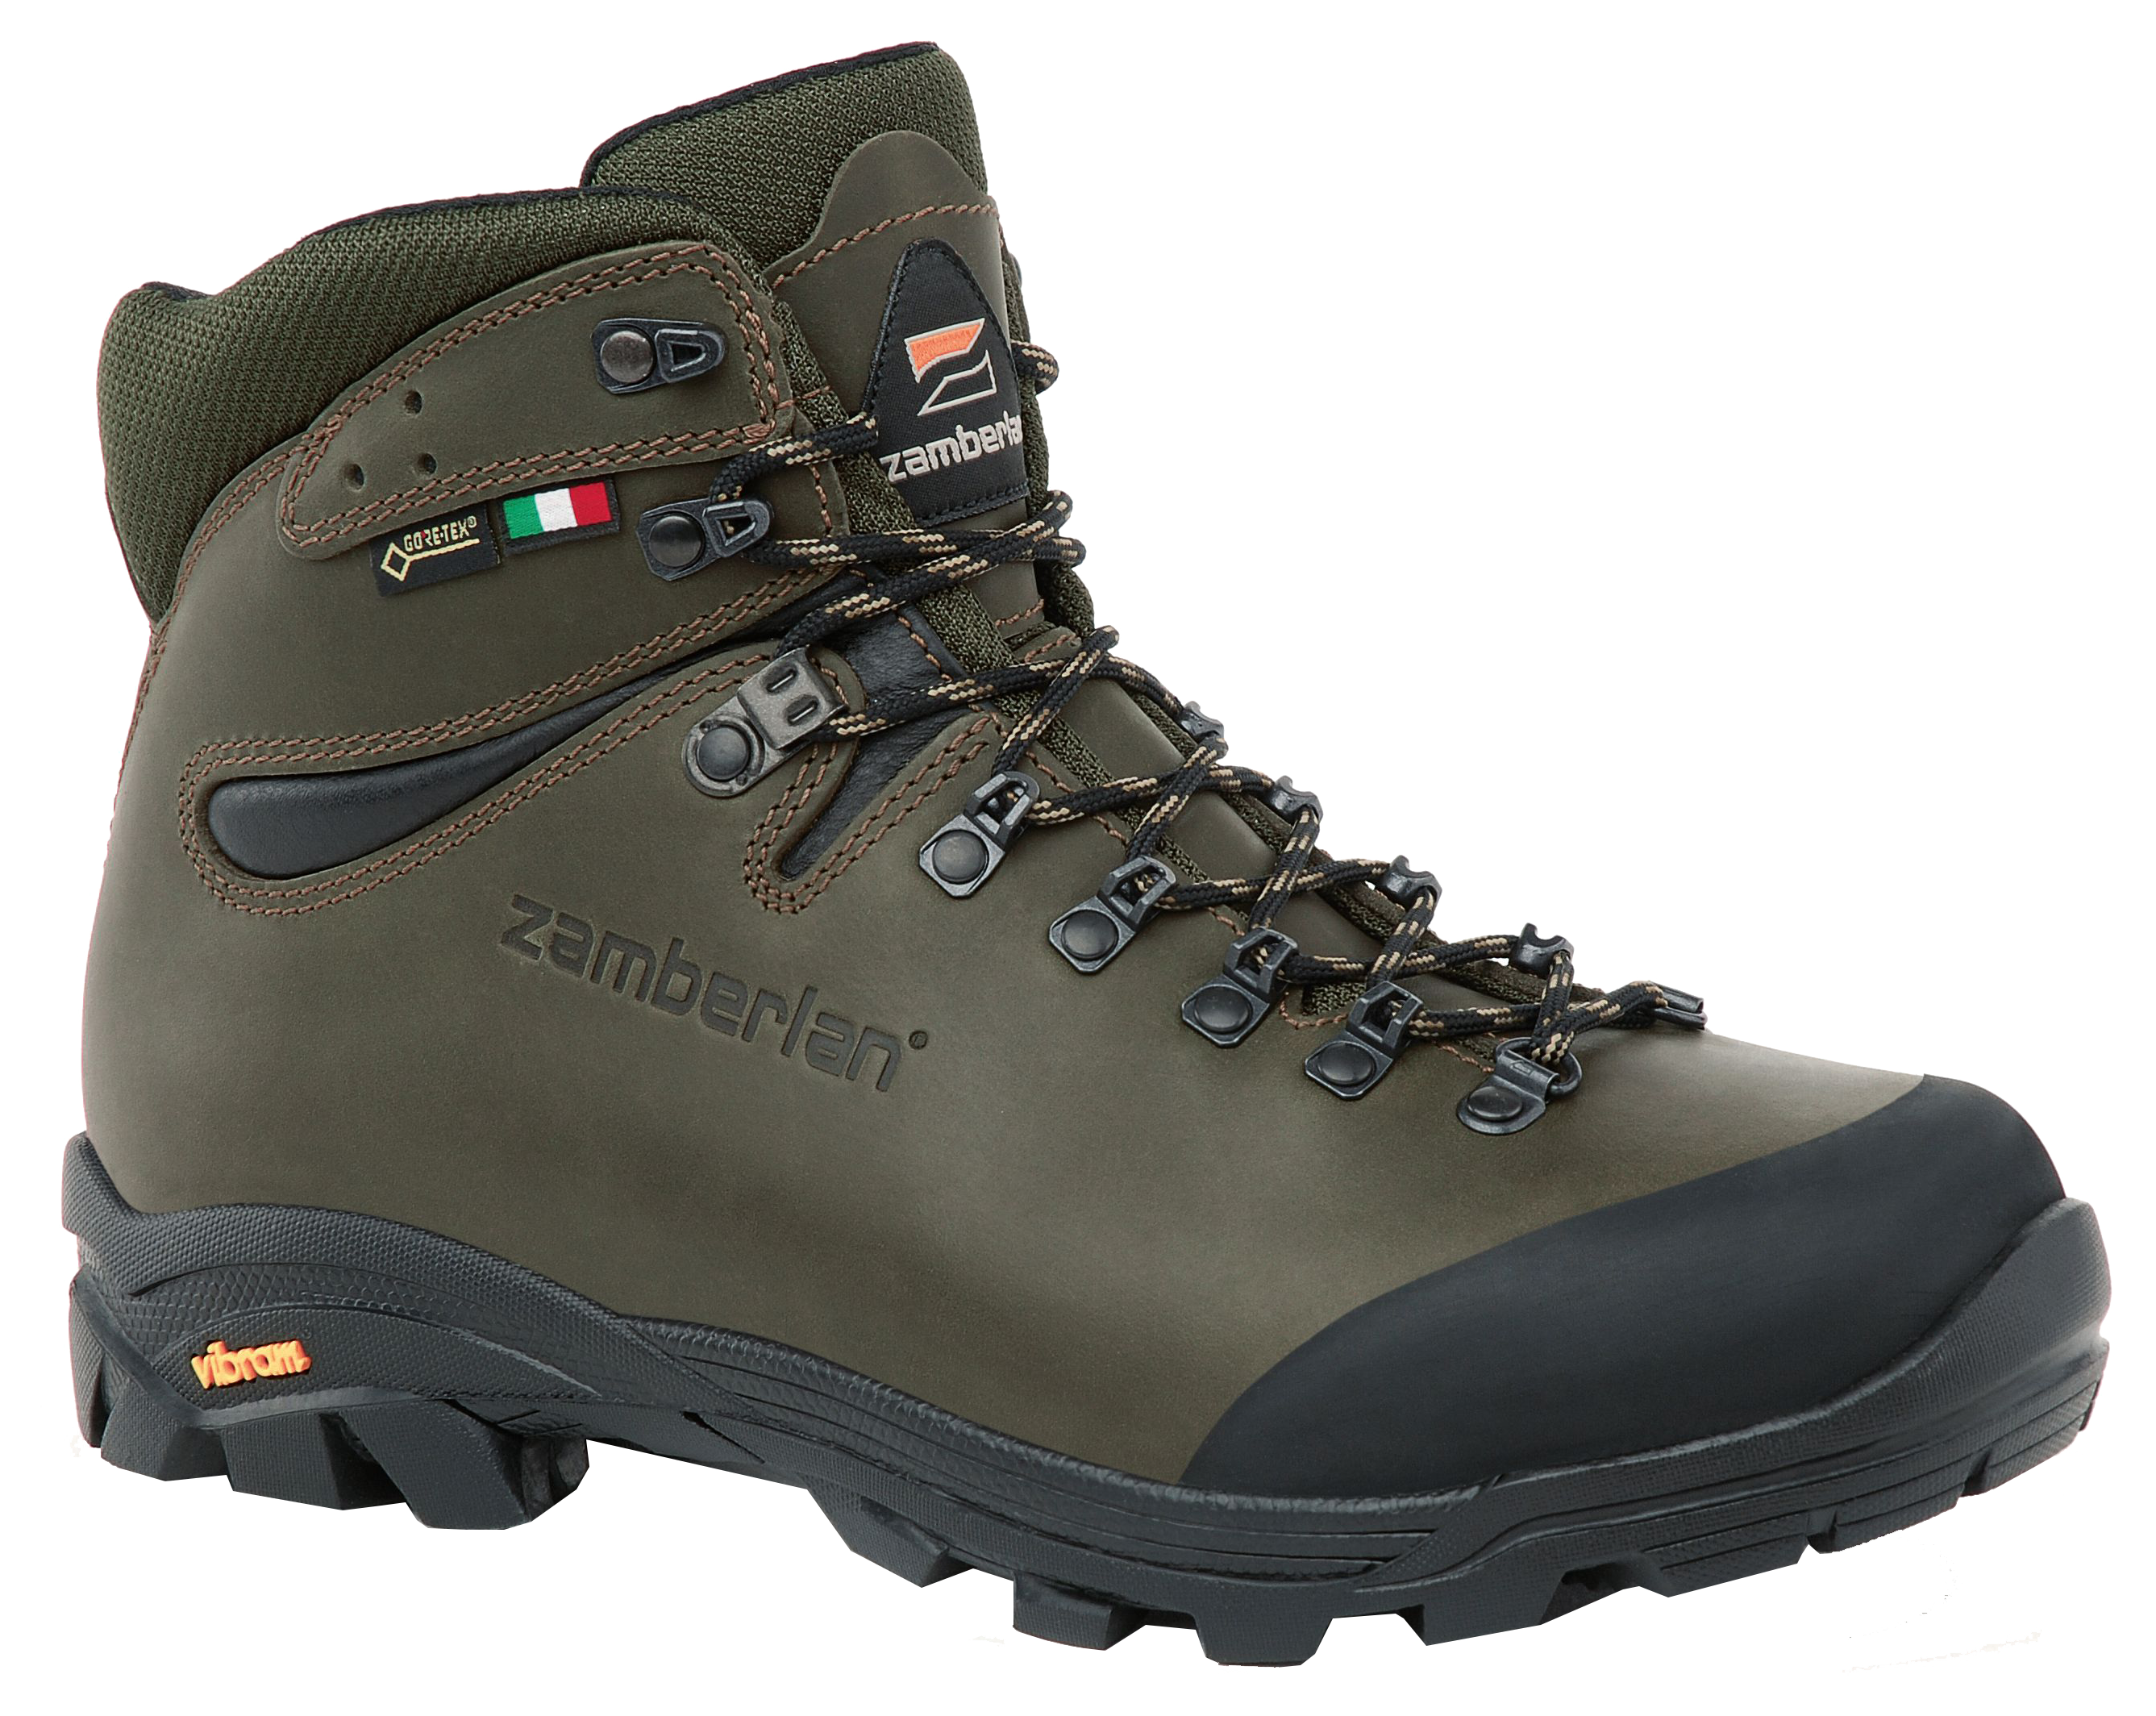 Zamberlan 1007 Vioz Hike GTX RR Waterproof Hiking Boots for Men